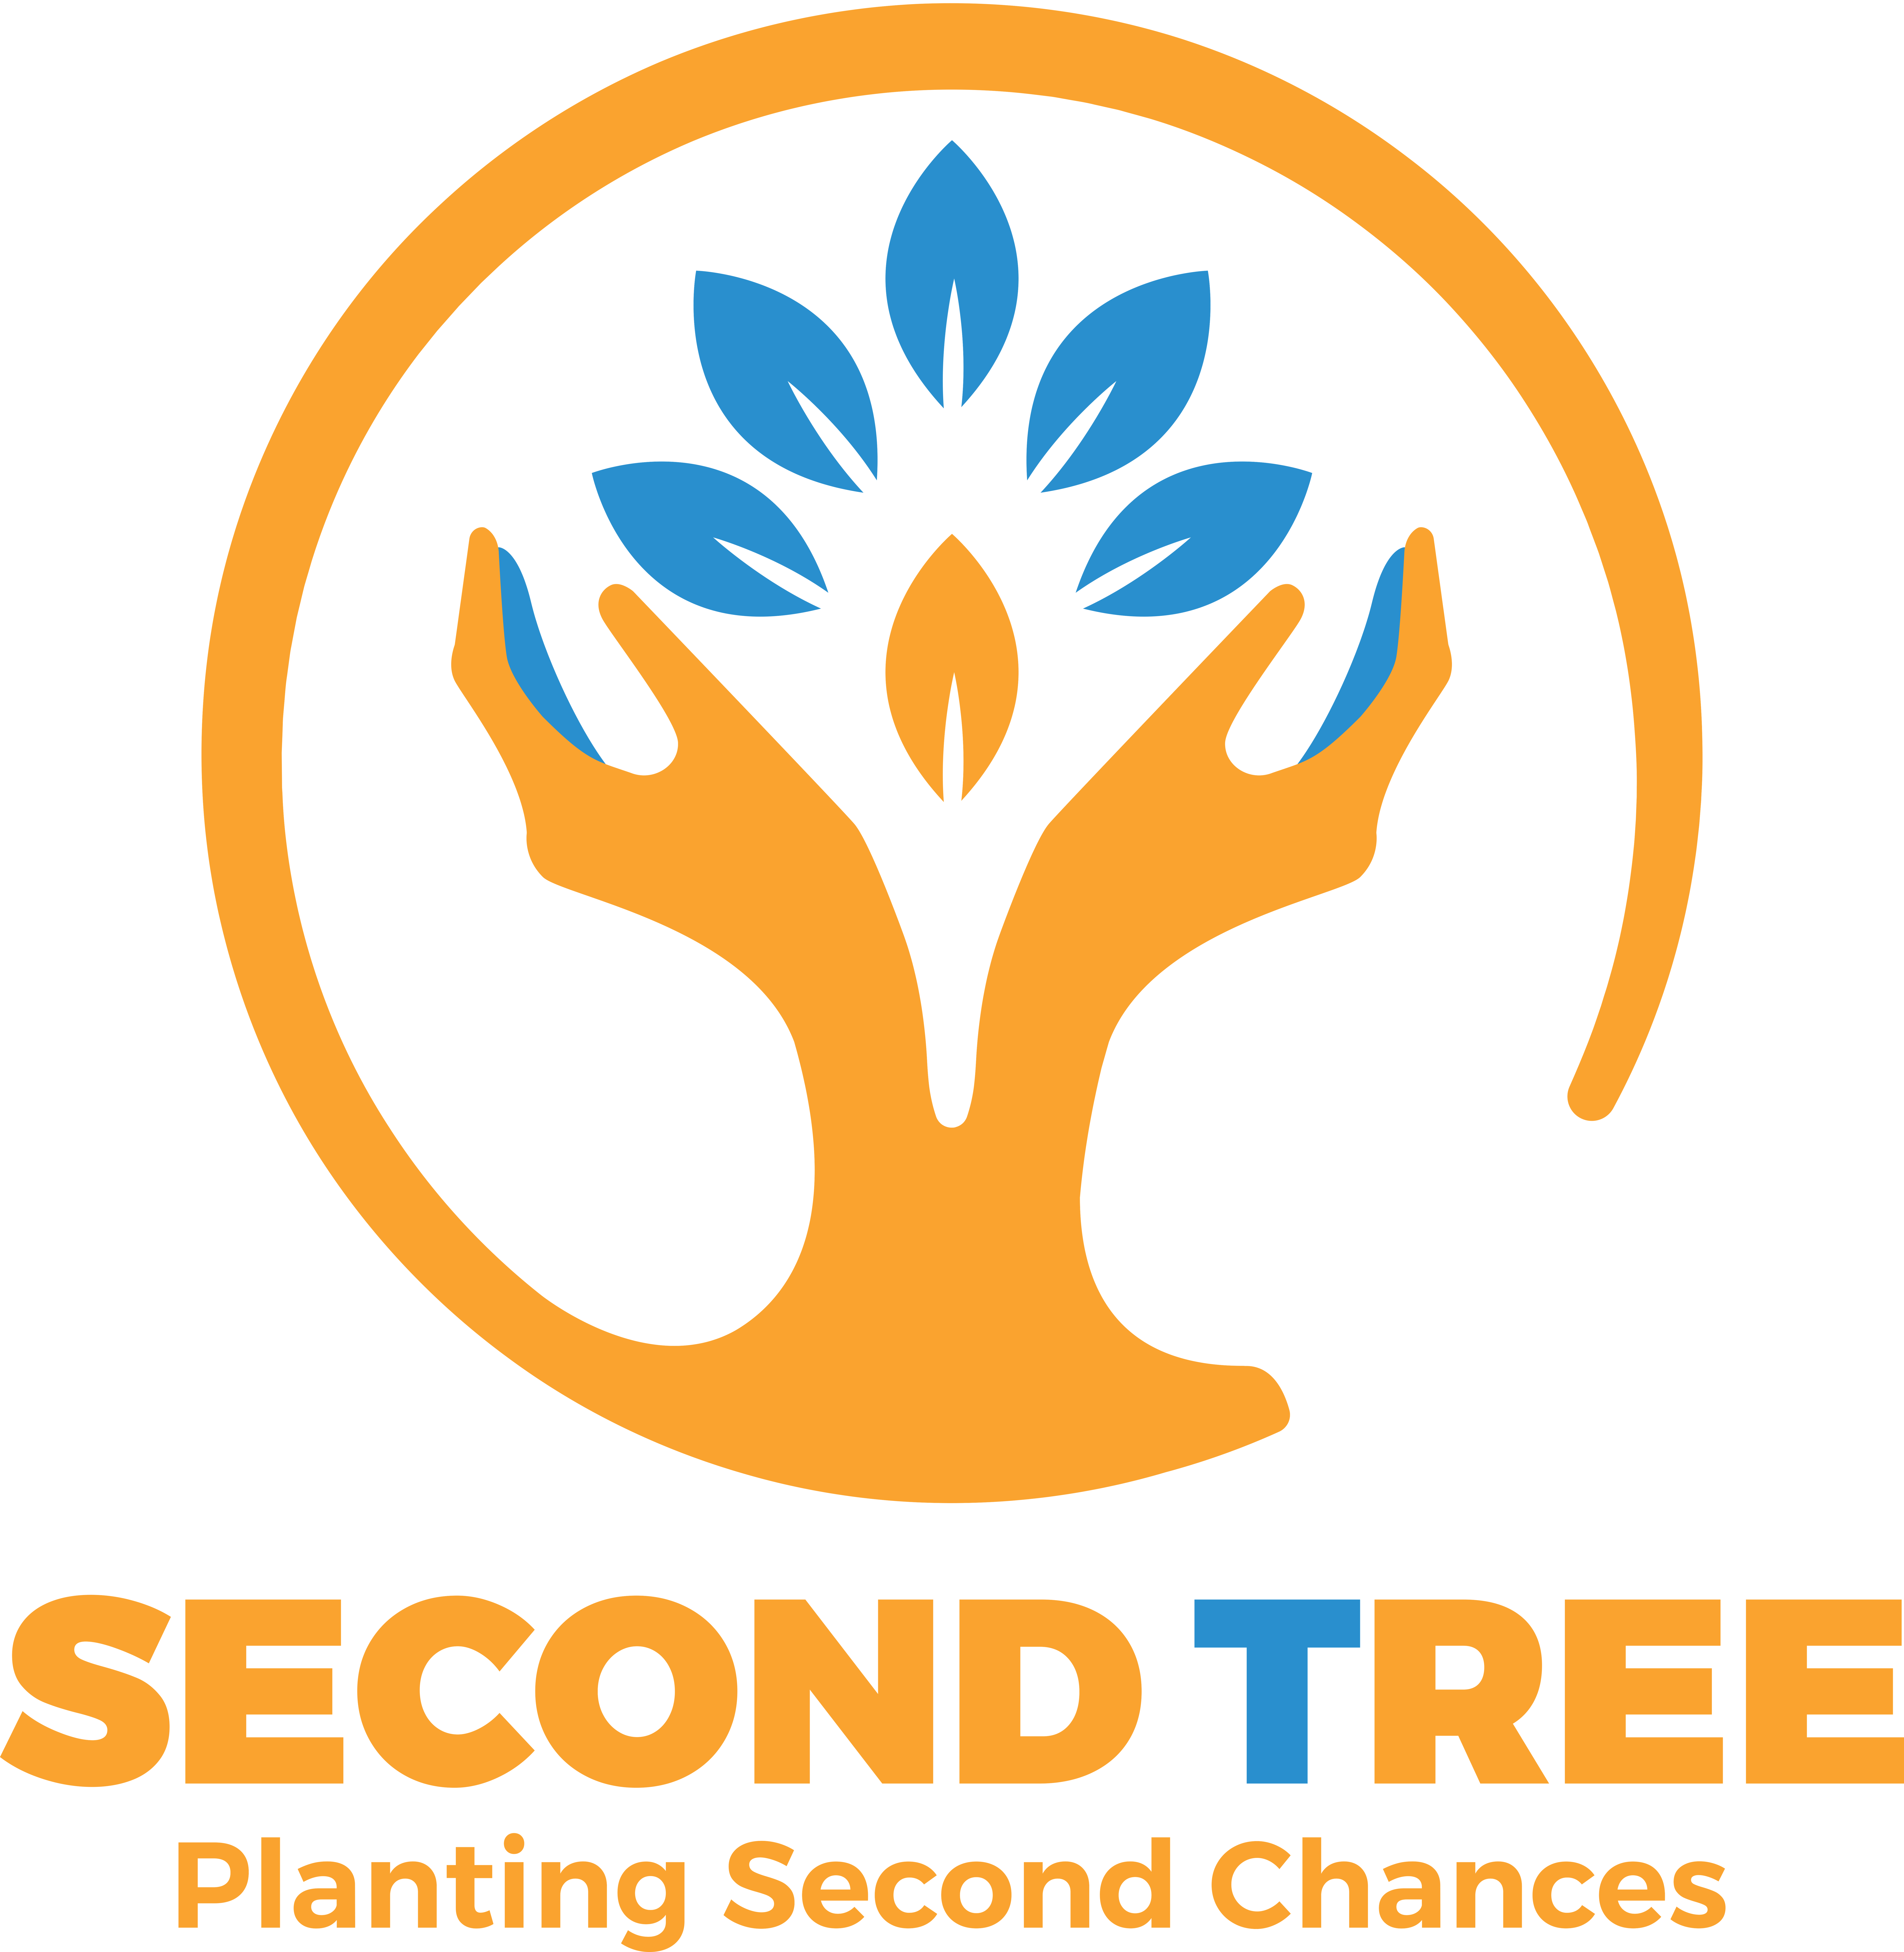 SECOND TREE - Planting Second Chances